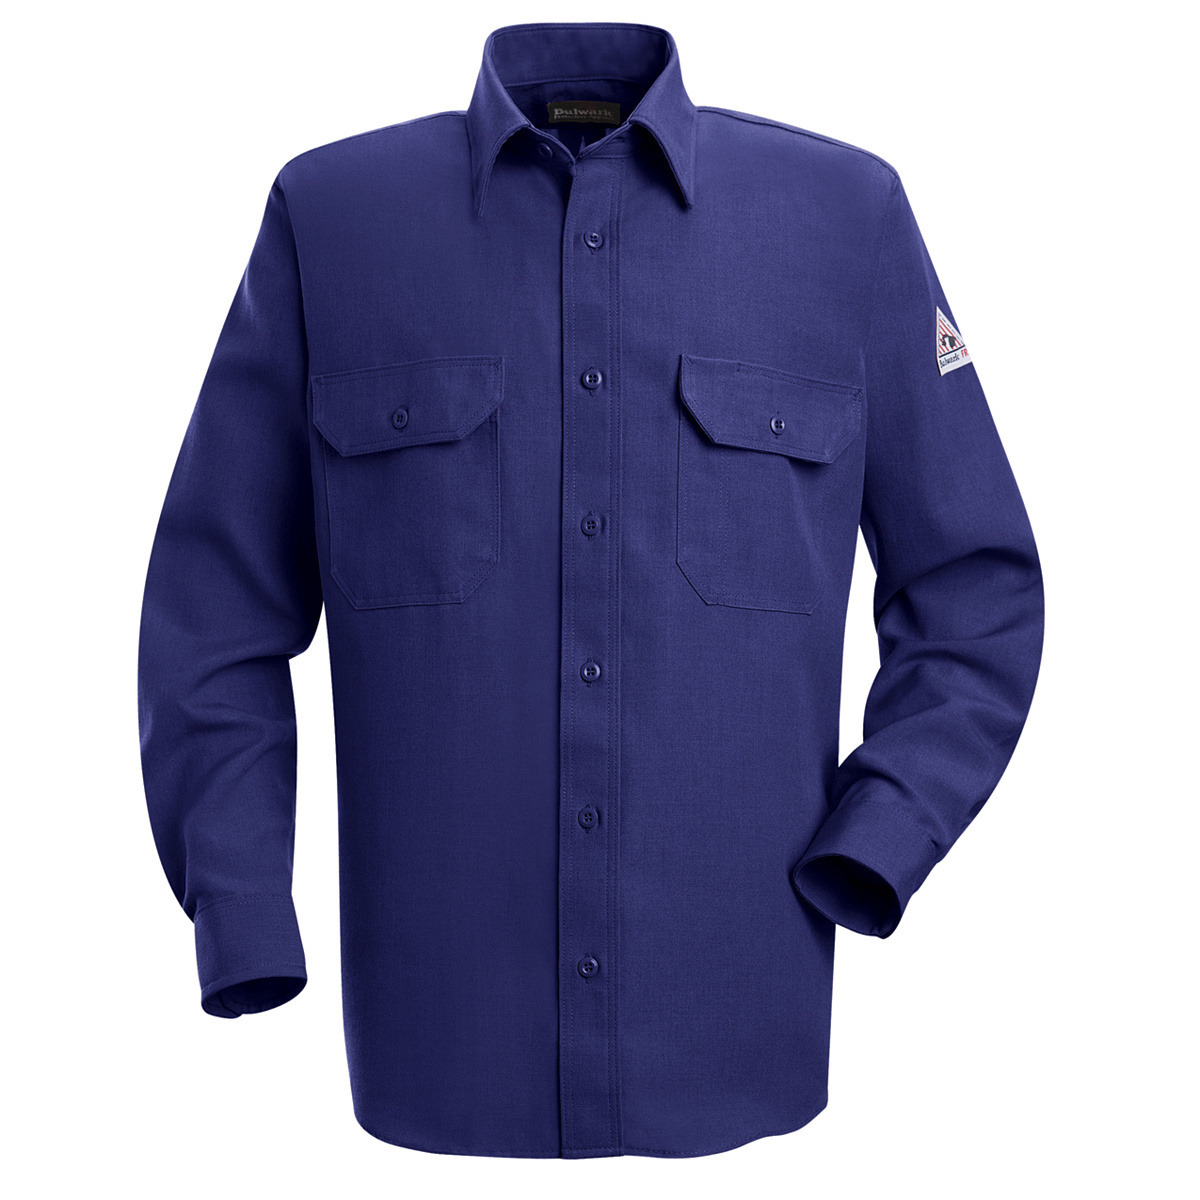 Bulwark® 3X Regular Royal Blue Nomex® IIIA/Nomex® Aramid/Kevlar® Aramid Flame Resistant Uniform Shirt With Button Front Closure